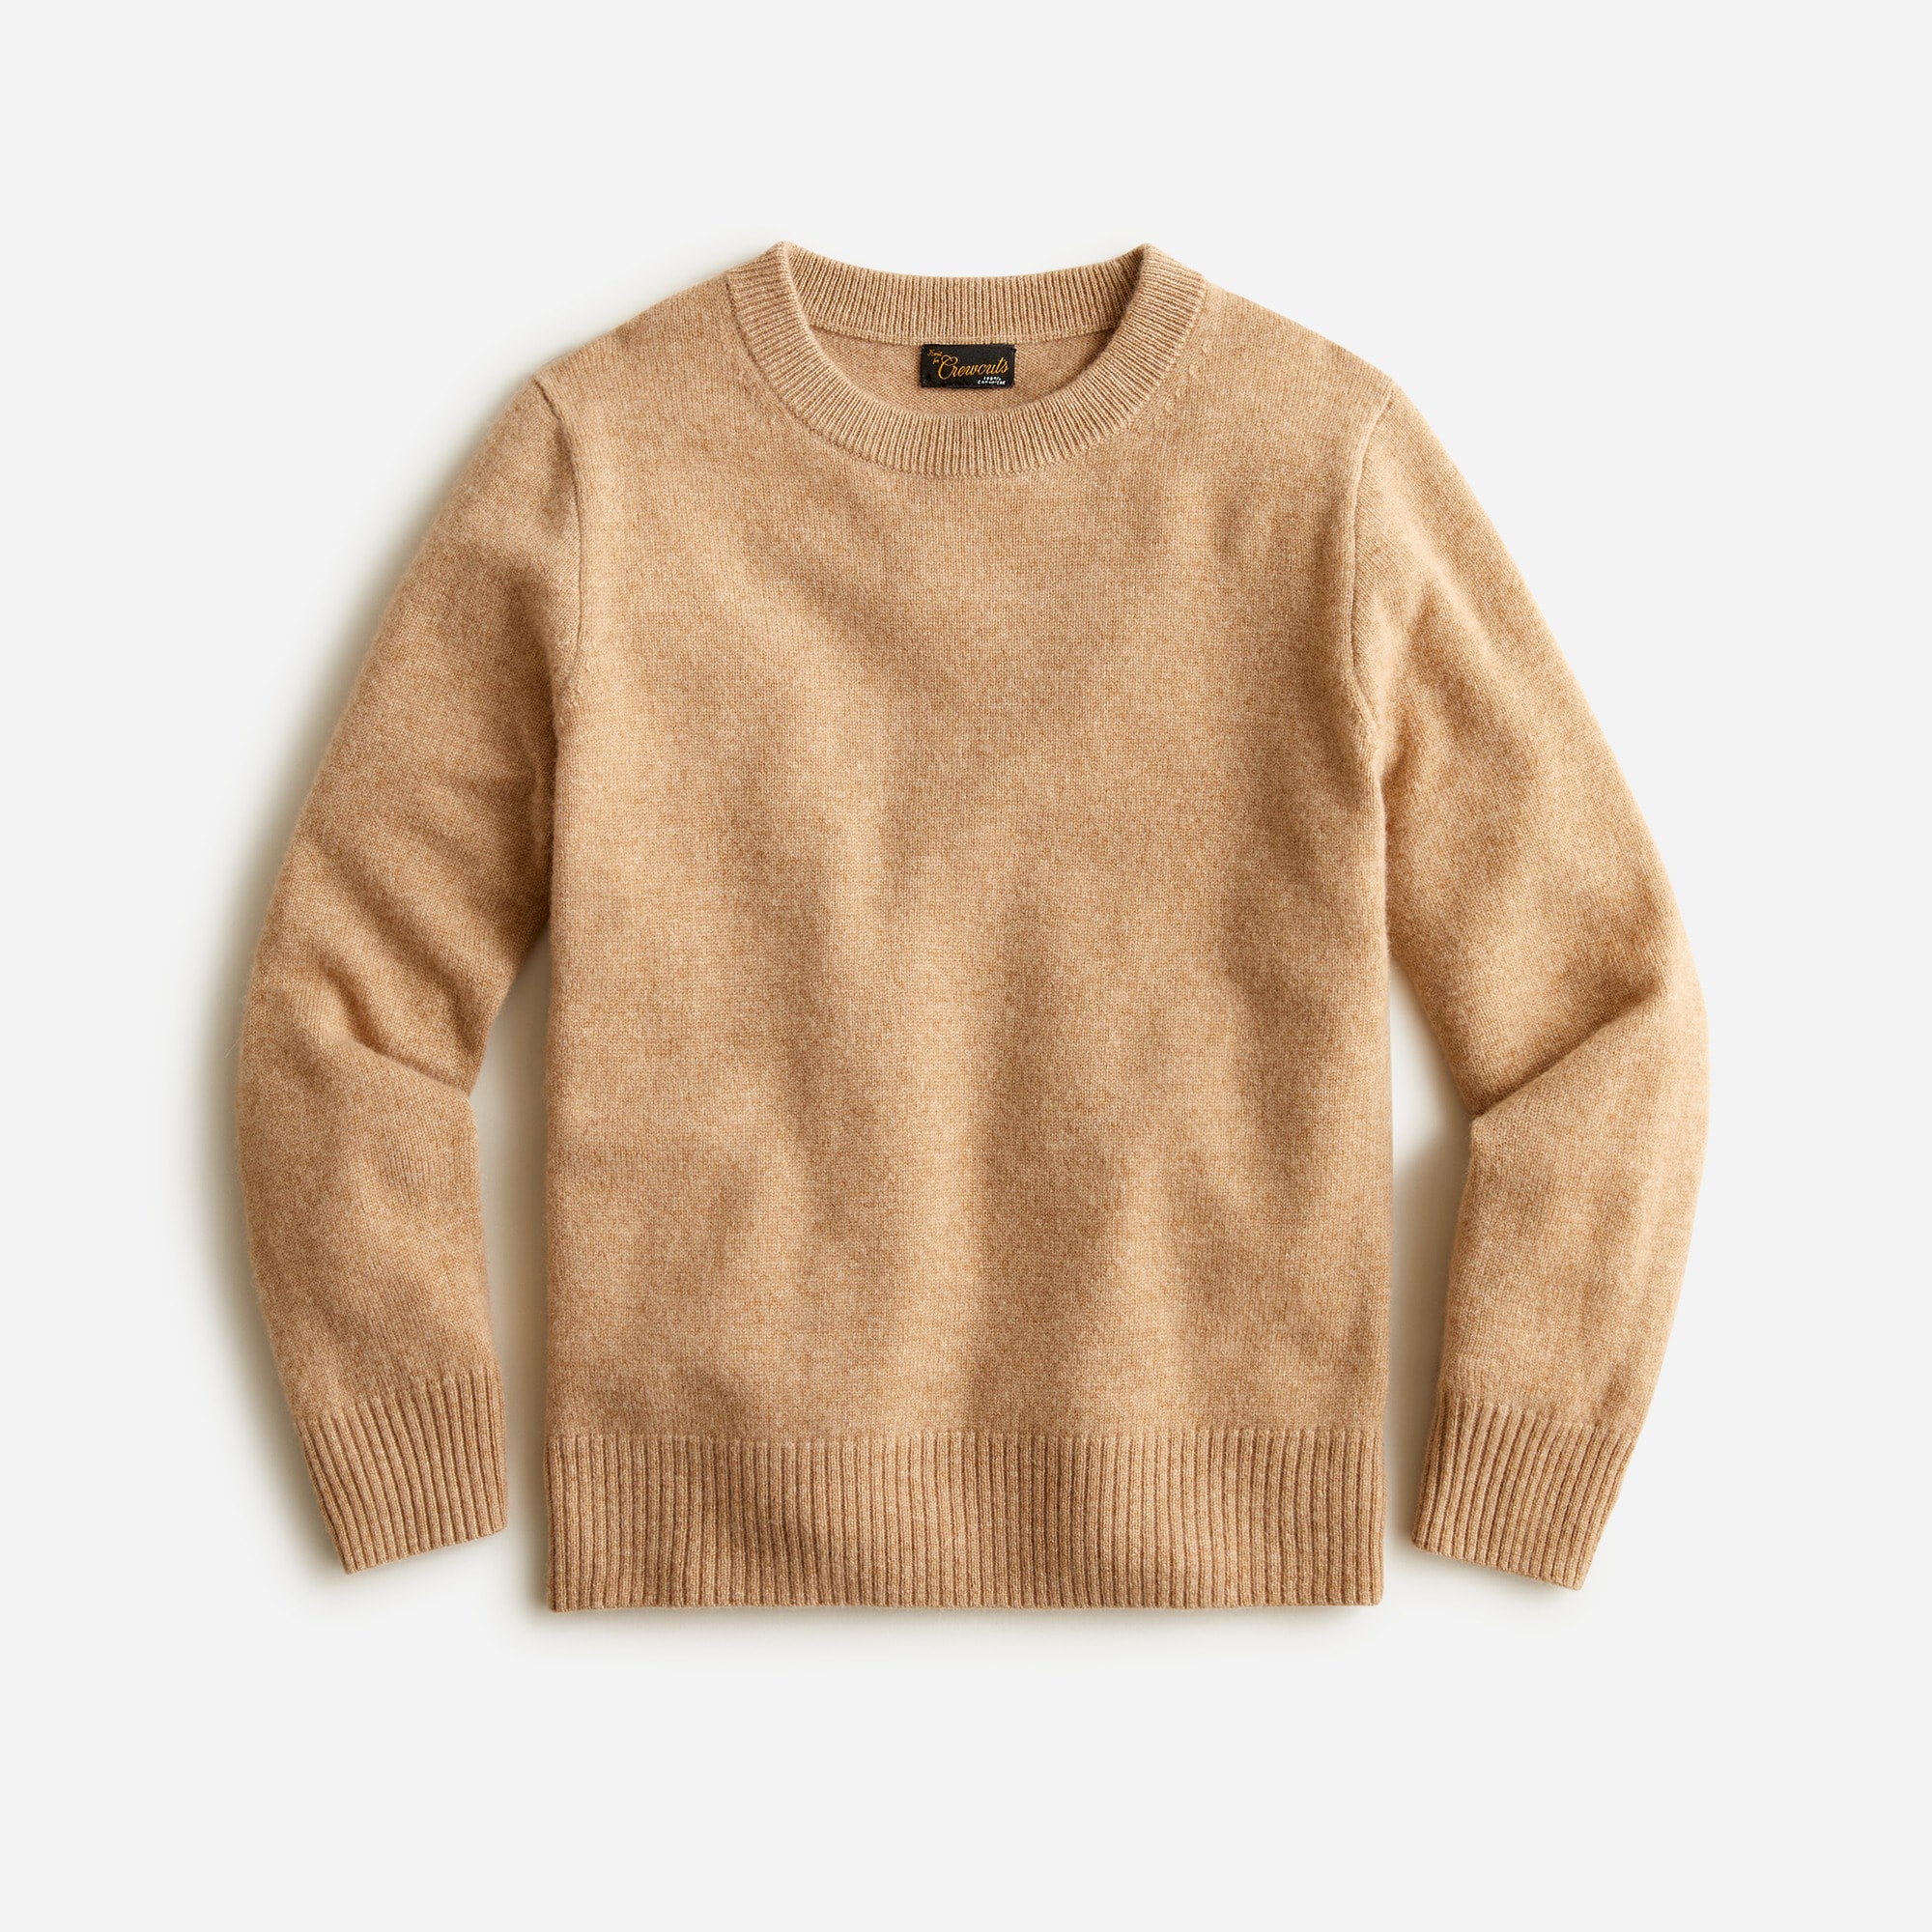  Kids' cashmere crewneck sweater